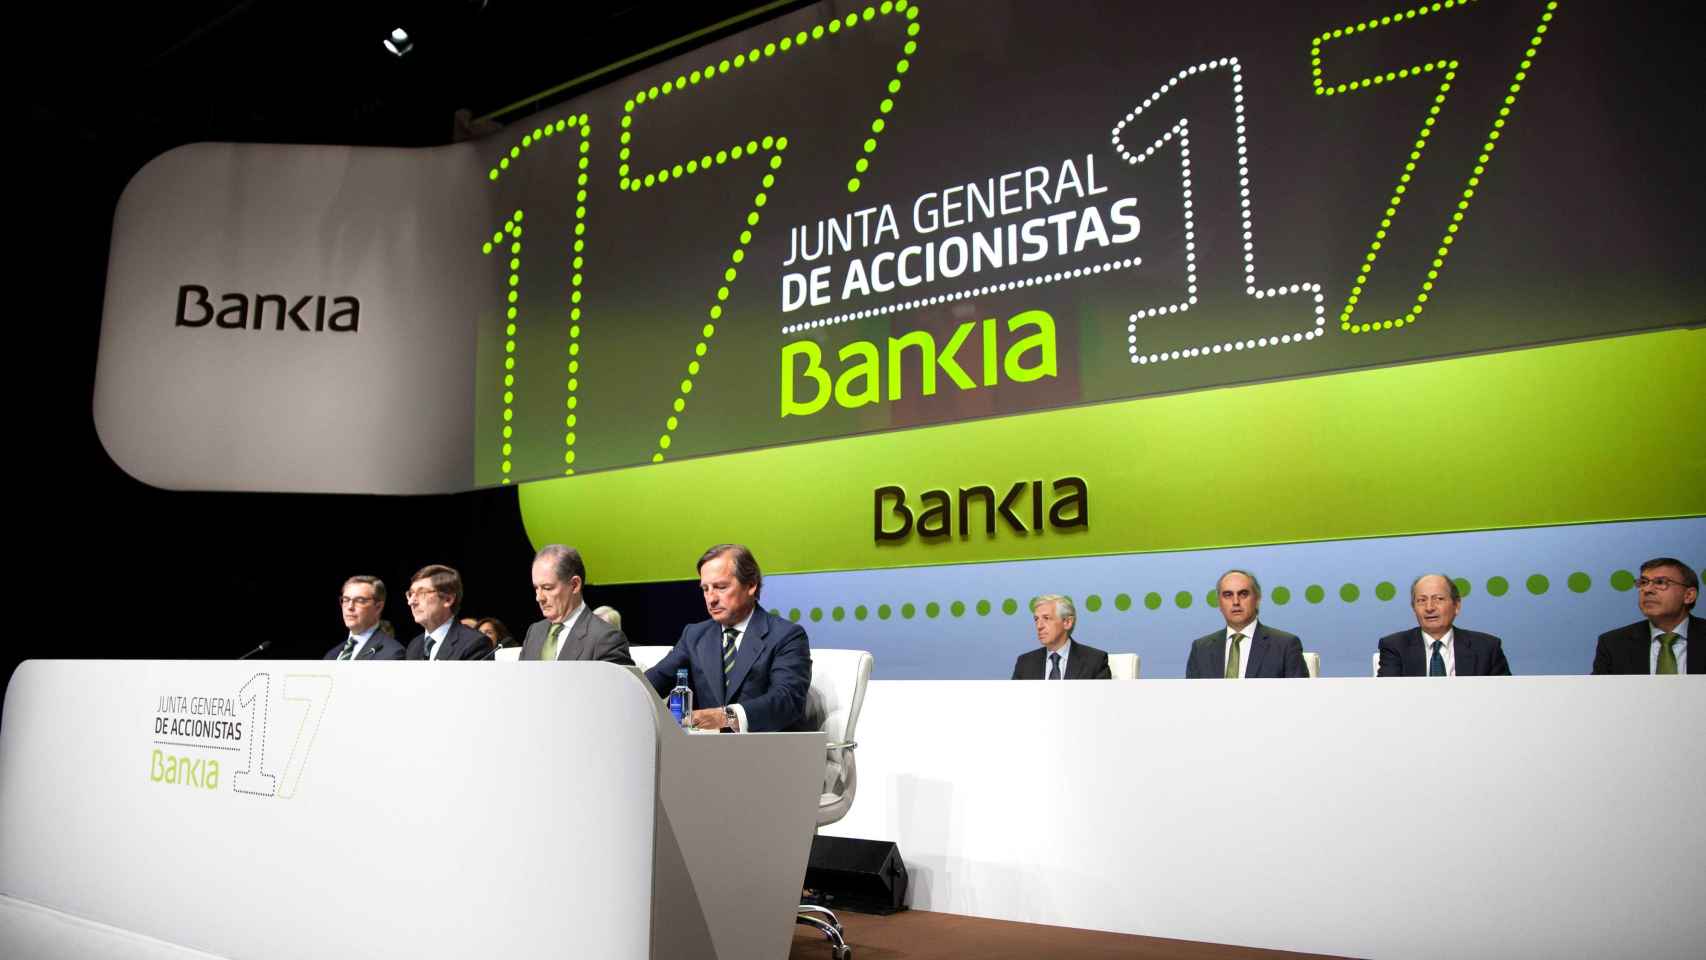 José Ignacio Goirigolzarri preside la junta de accionistas de Bankia.